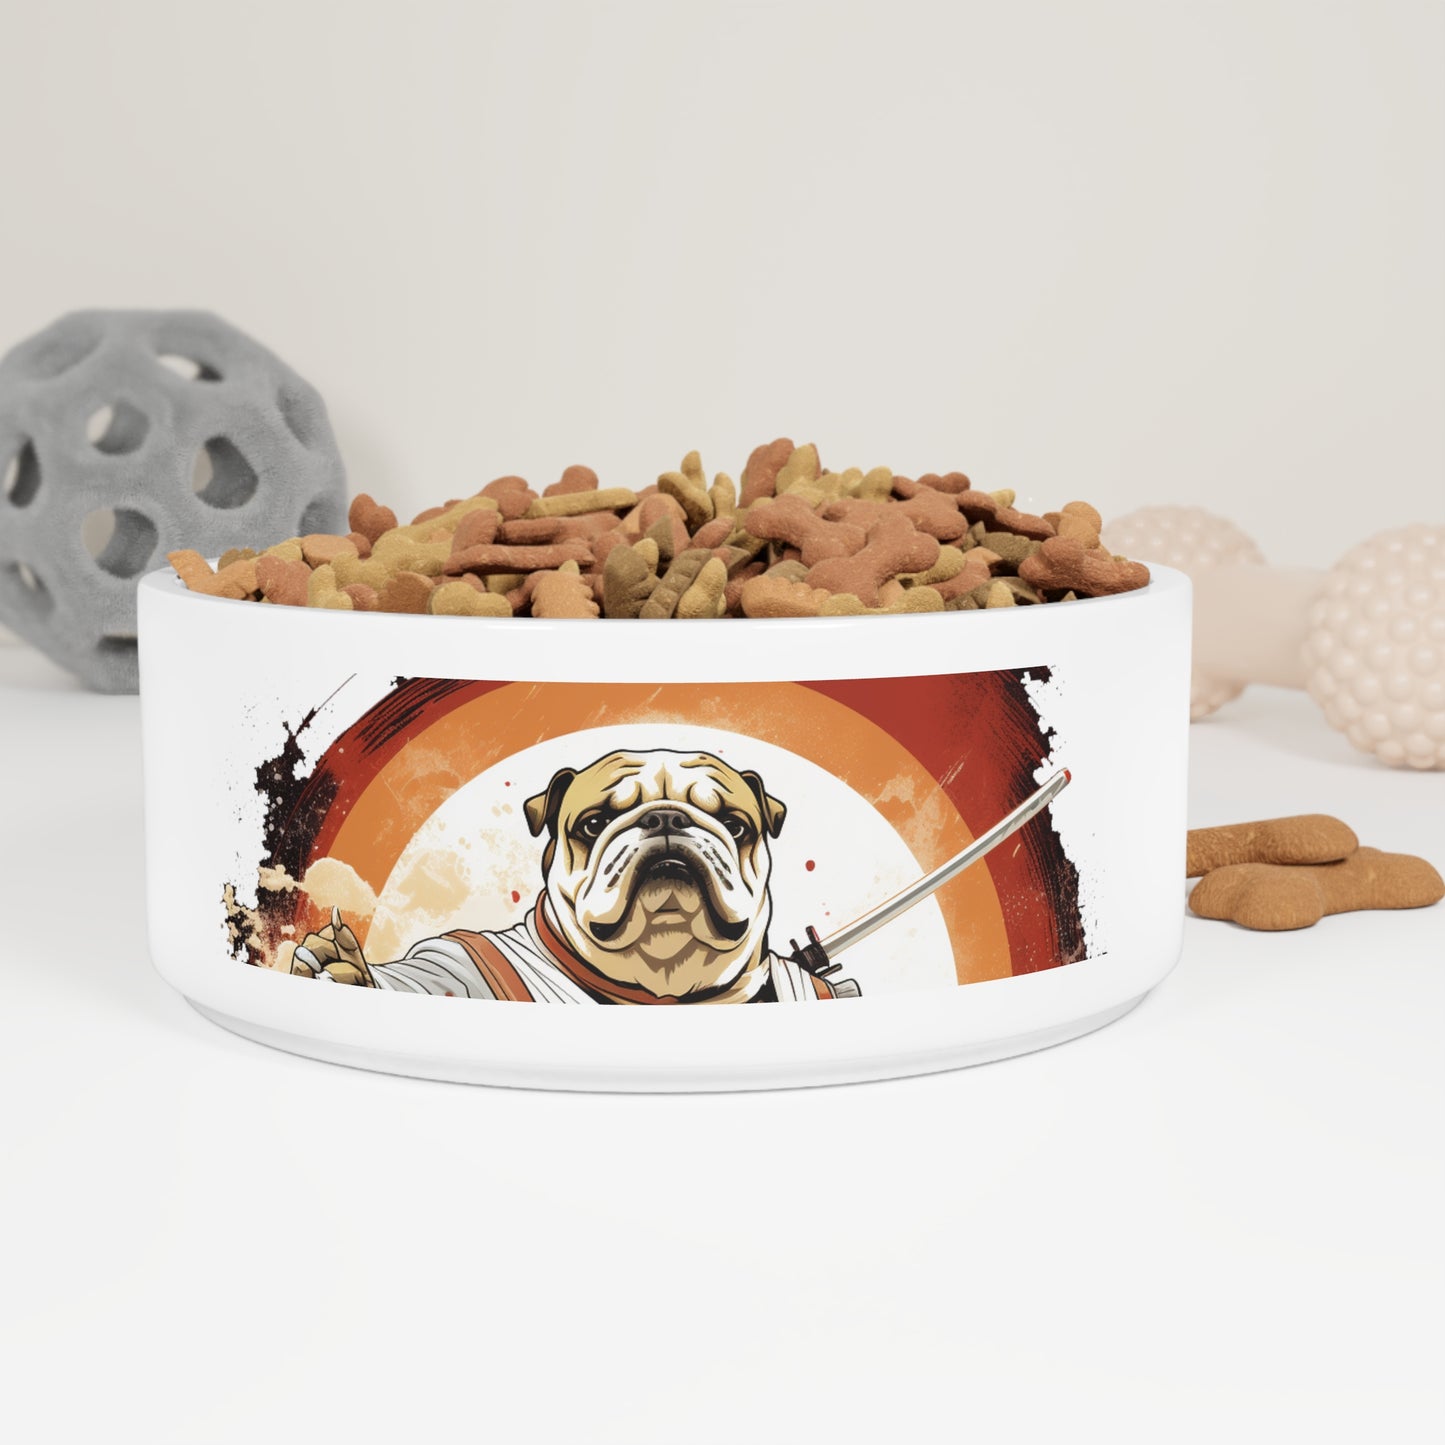 Samurai Bulldog Pet Bowl